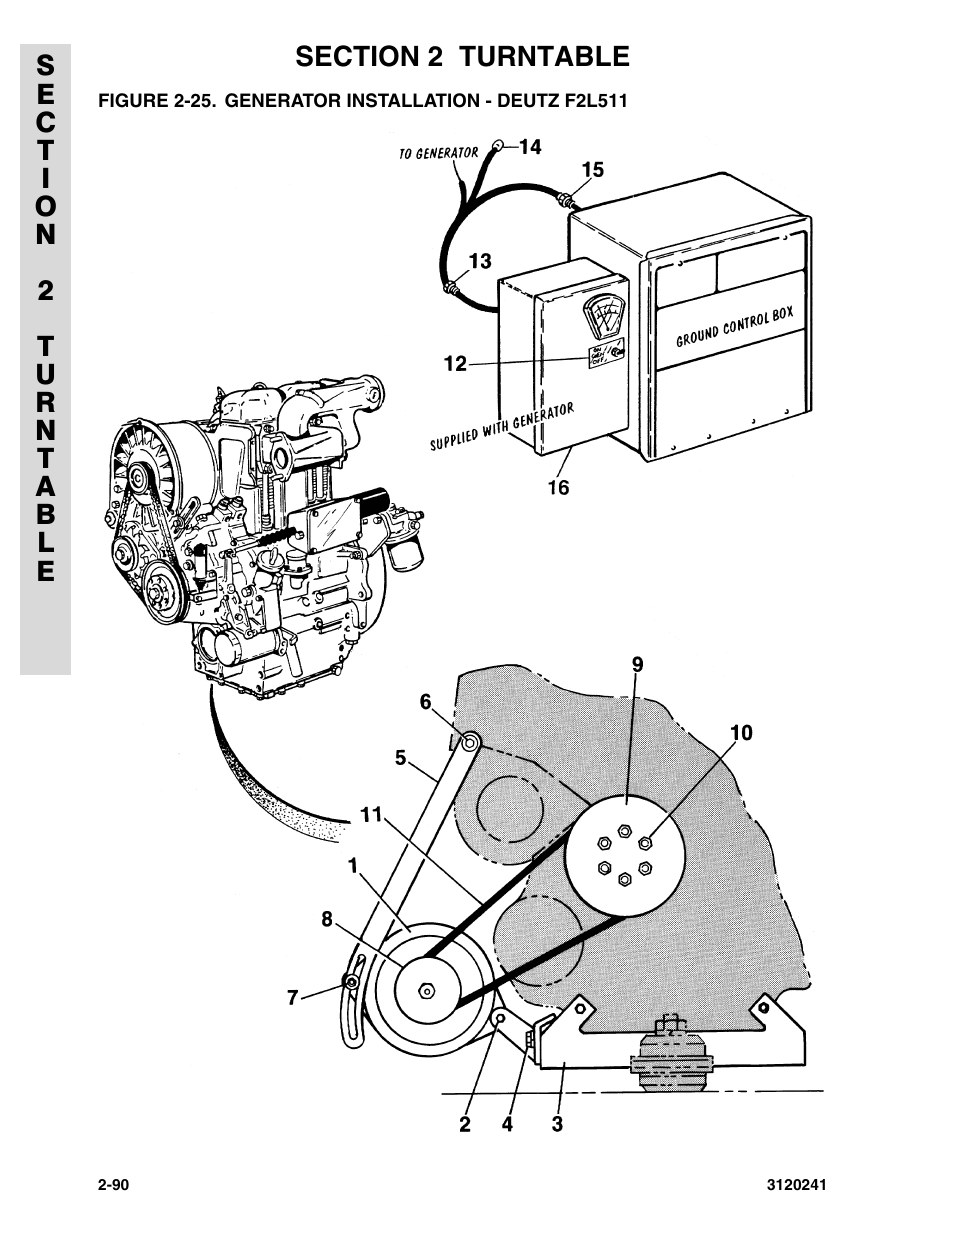 Figure 2-25. generator installation - deutz f2l511 | JLG 40H Parts